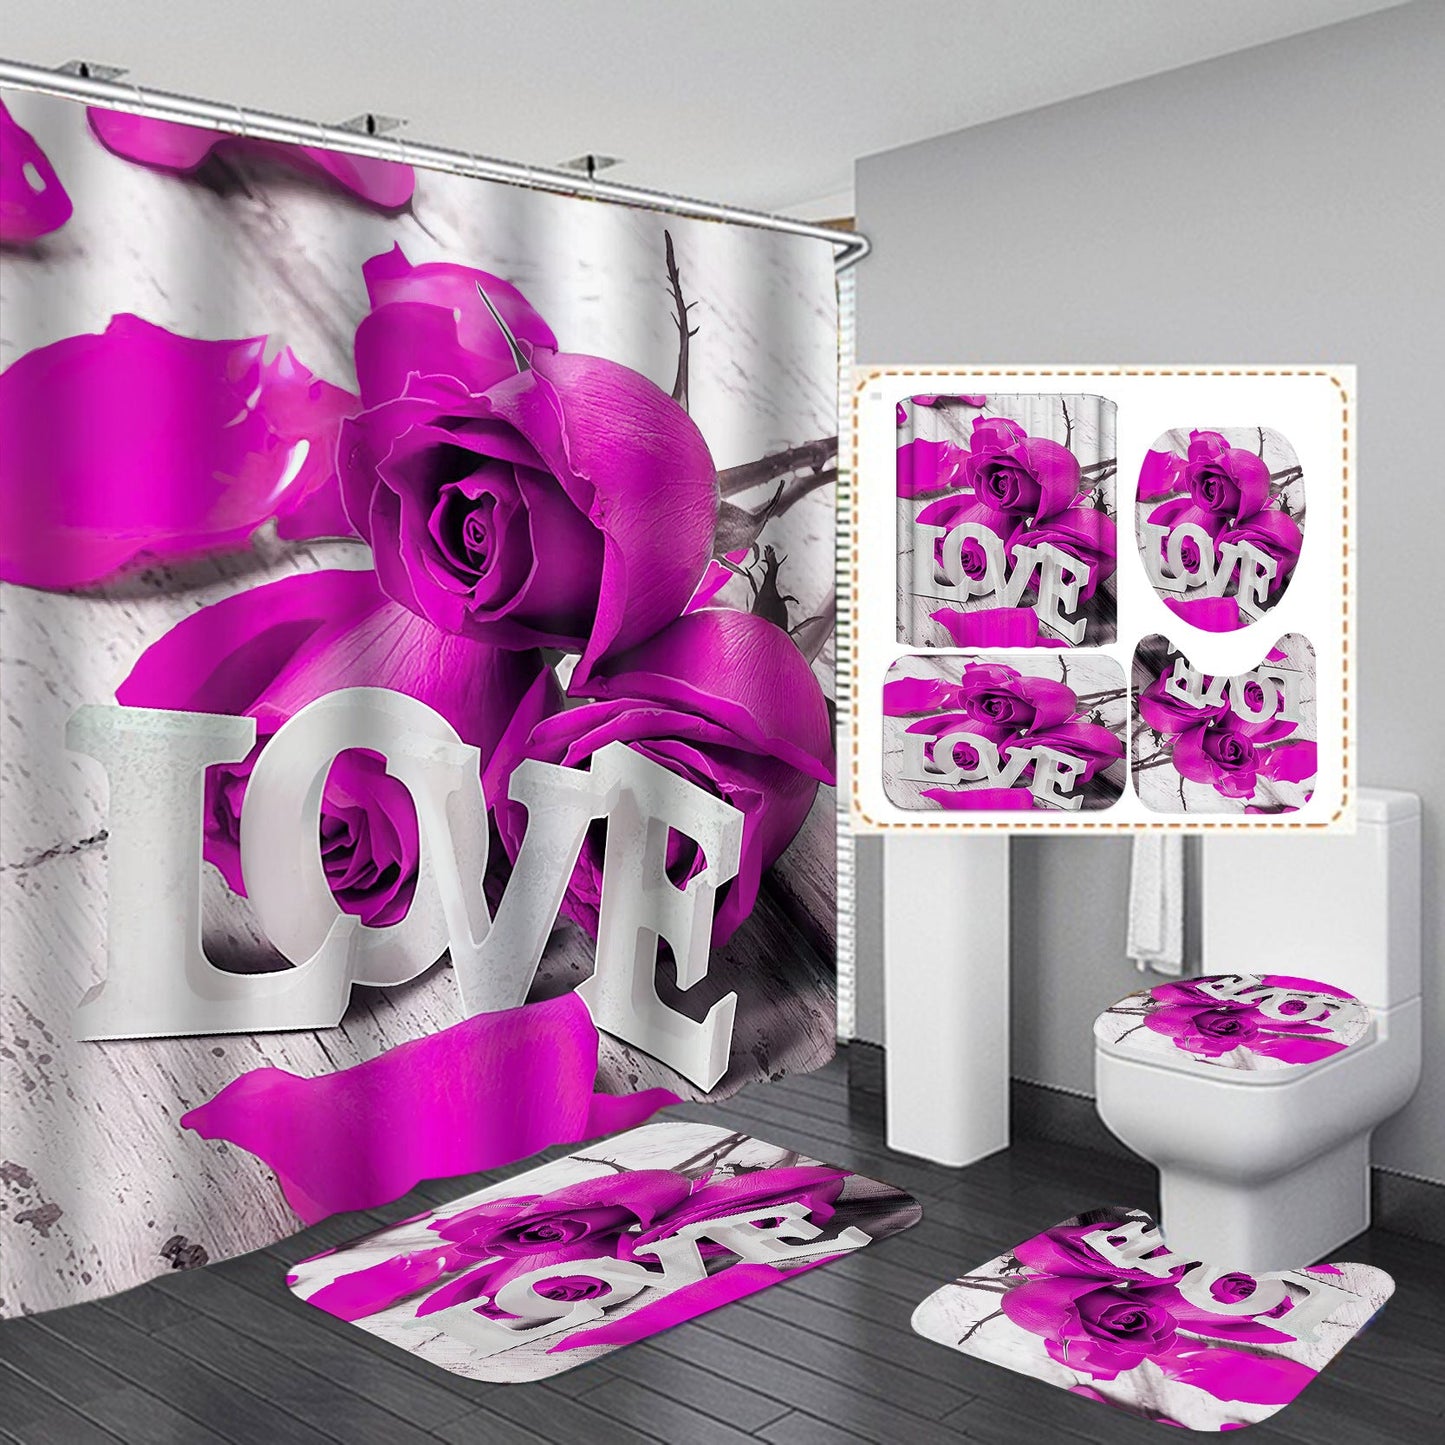 "Love" 3D Rose Design Shower Curtain Bathroom SetsNon-Slip Toilet Lid Cover